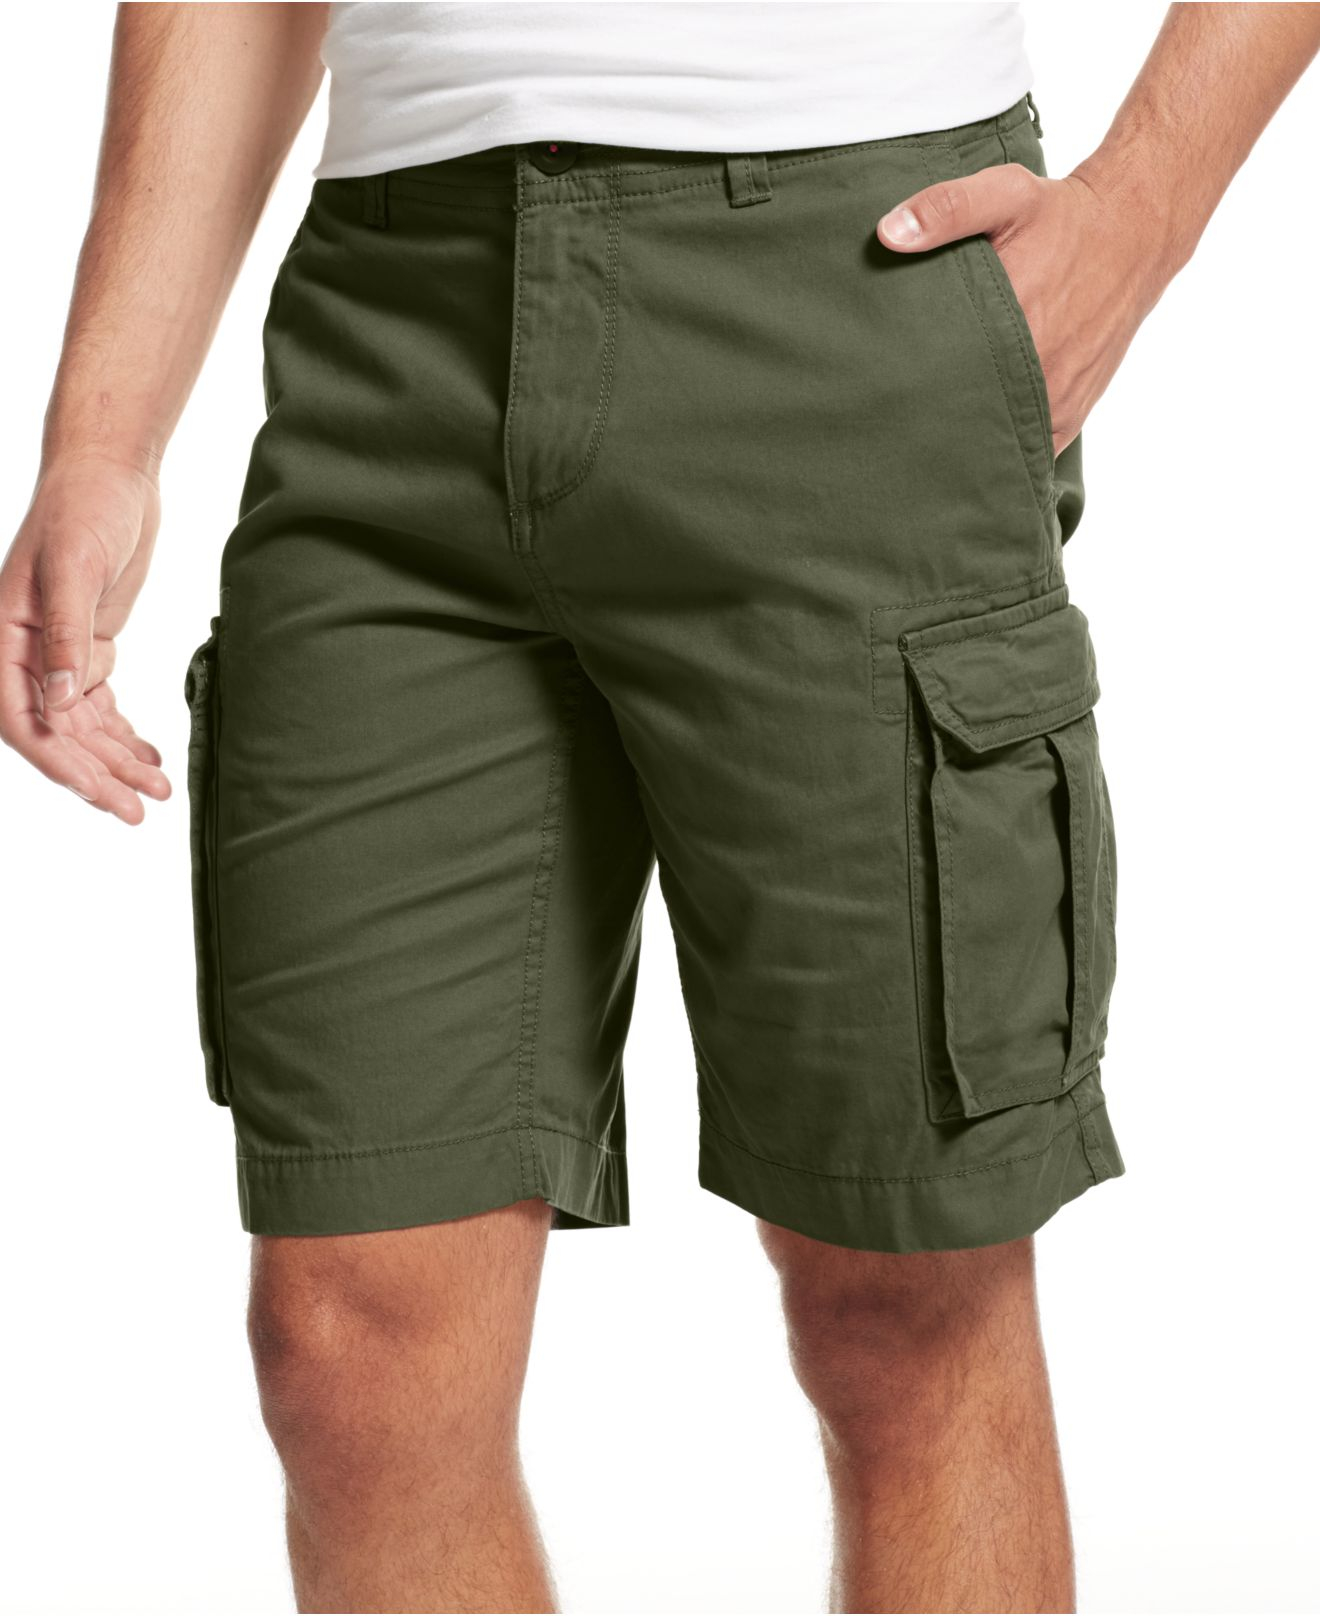 tommy hilfiger bermuda shorts mens